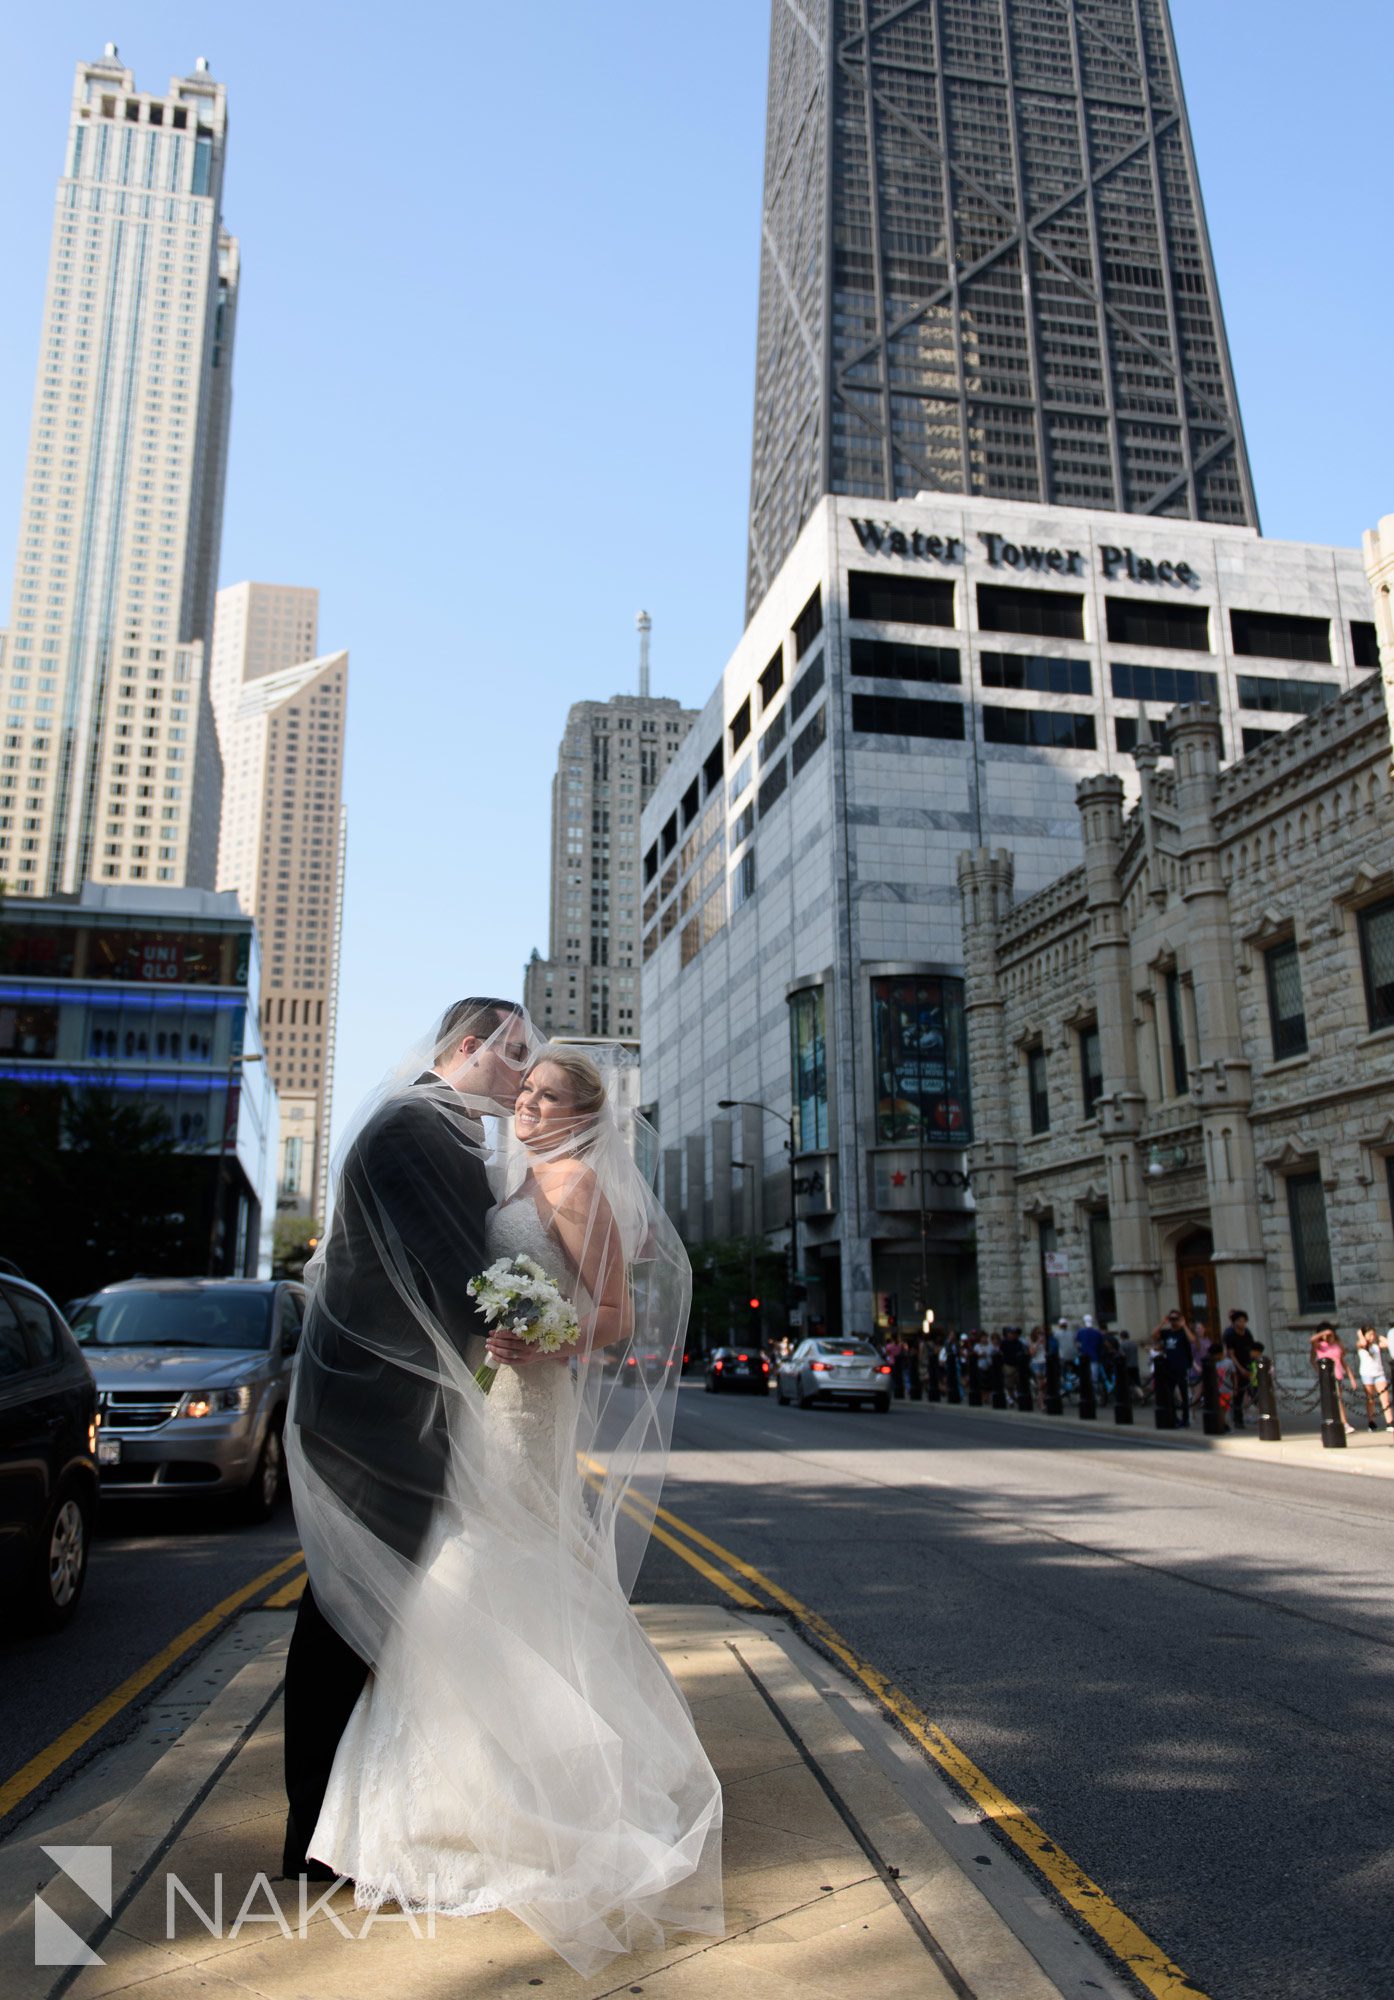 Michigan avenue Chicago wedding photos 